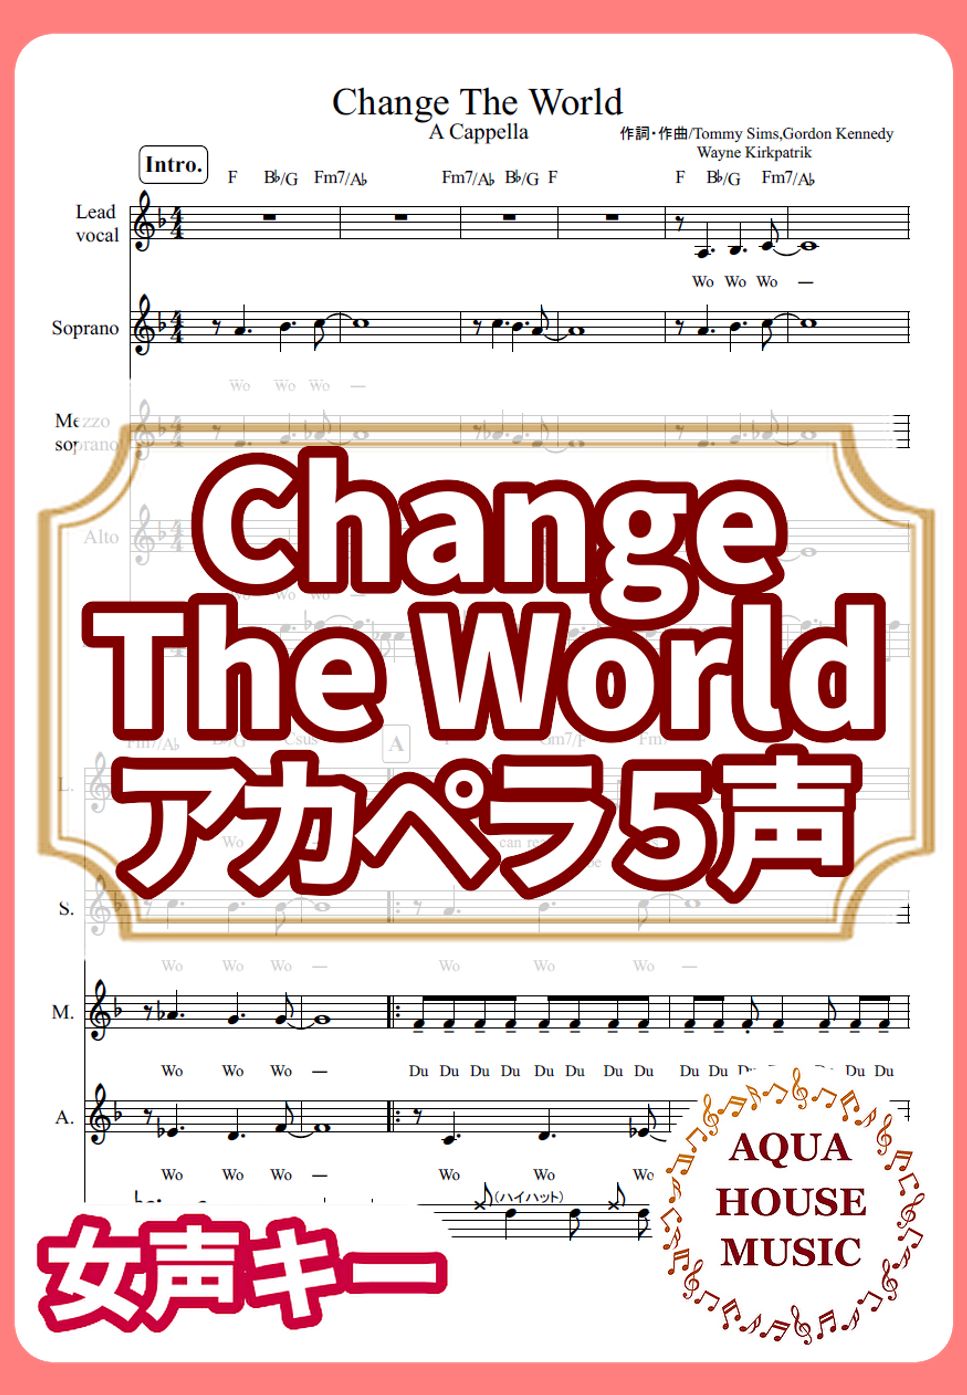 Eric Clapton - Change The World (アカペラ楽譜♪５声ボイパなし) by 飯田 亜紗子